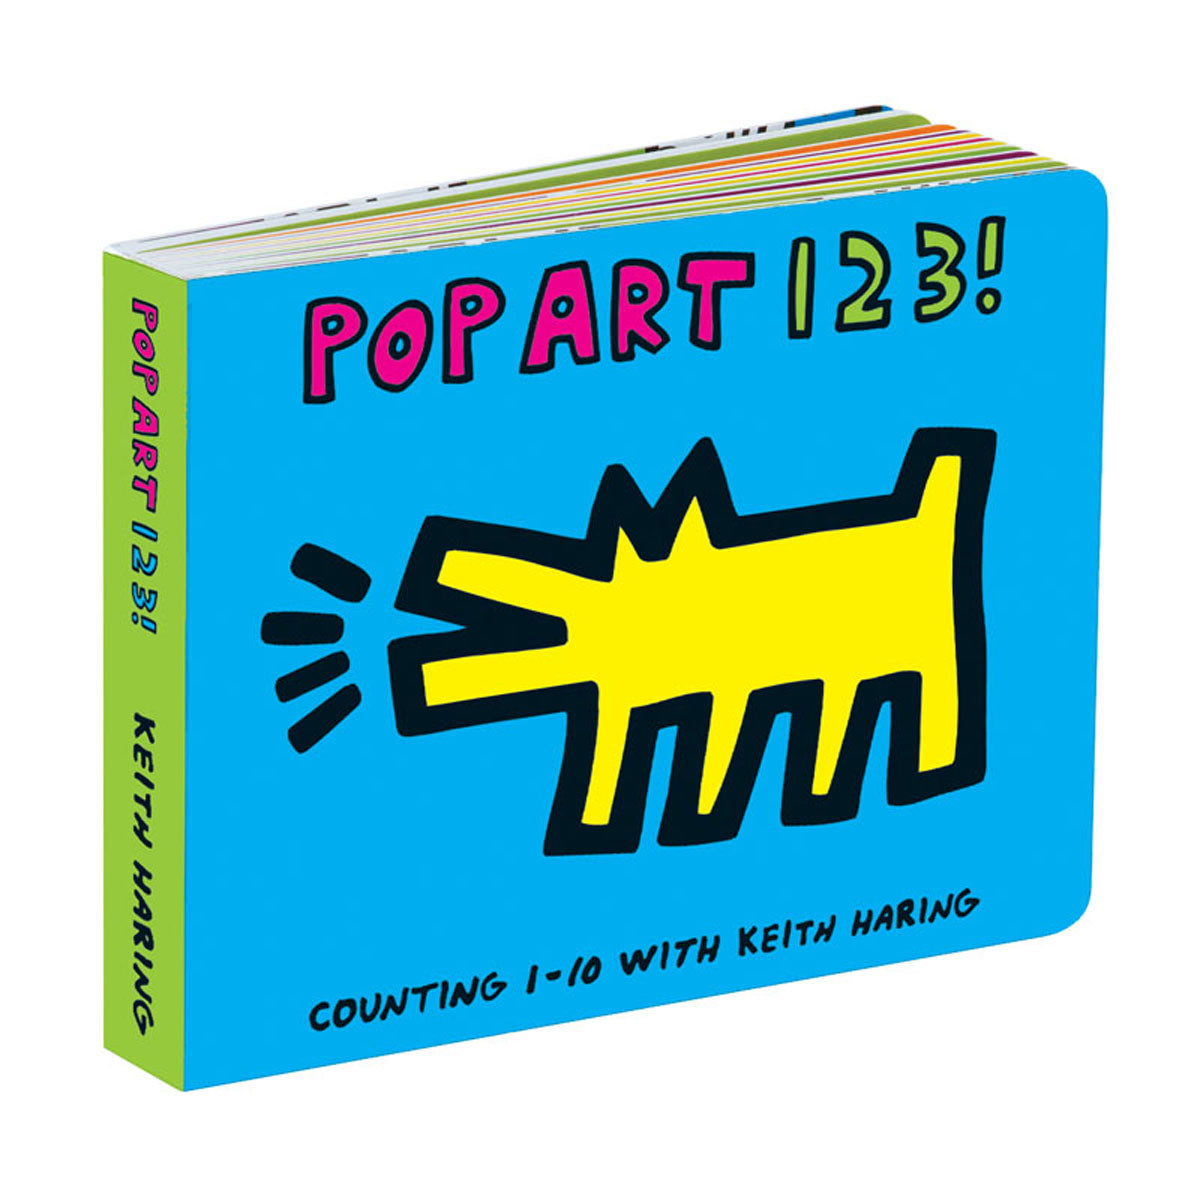 Keith Haring Pop Art 123